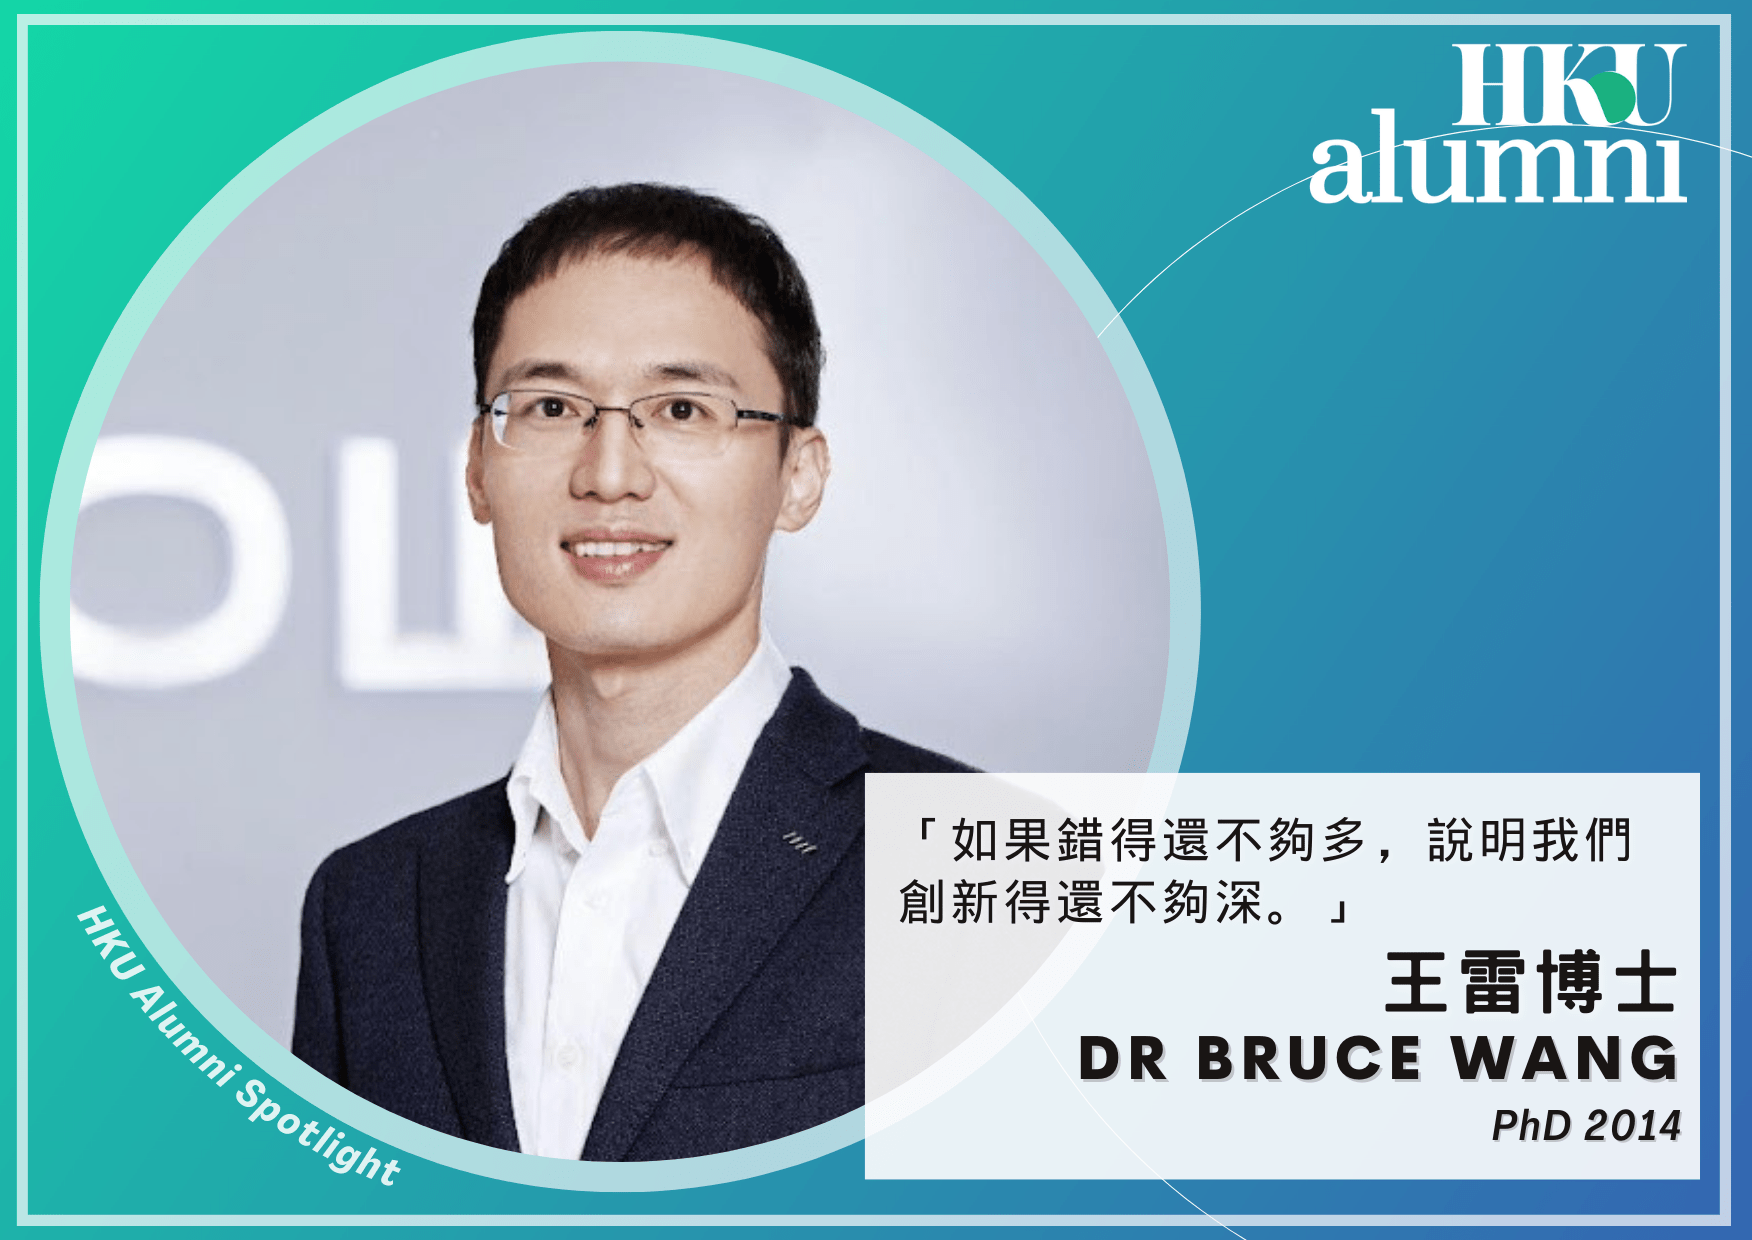 Alumni Feature | Dr Bruce wang 王雷博士 PhD 2014